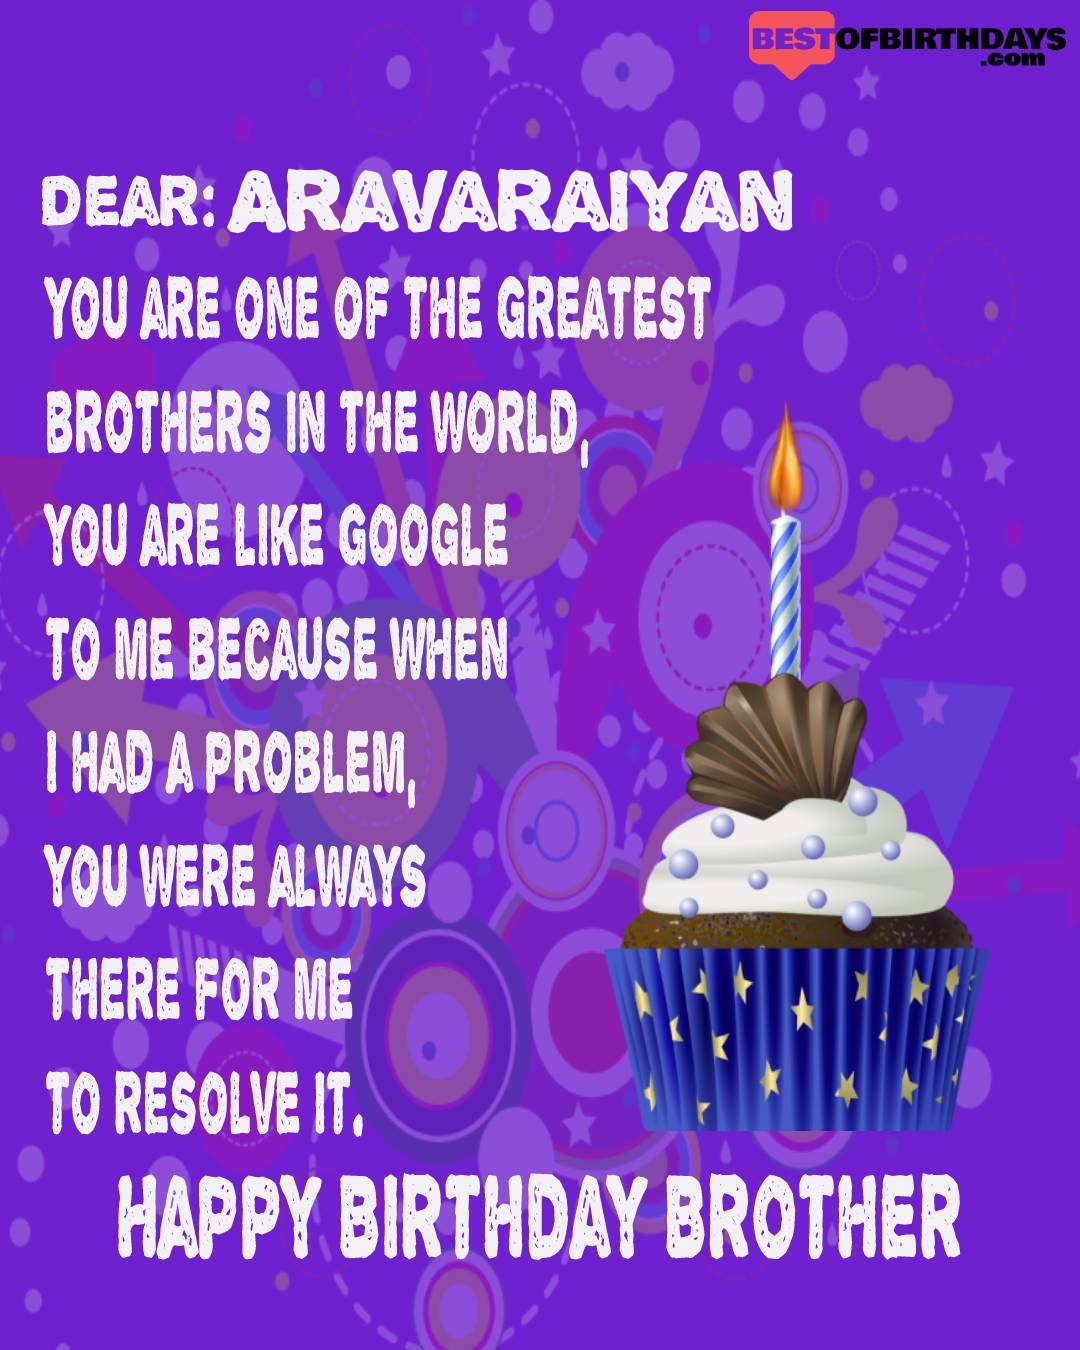 Happy birthday aravaraiyan bhai brother bro